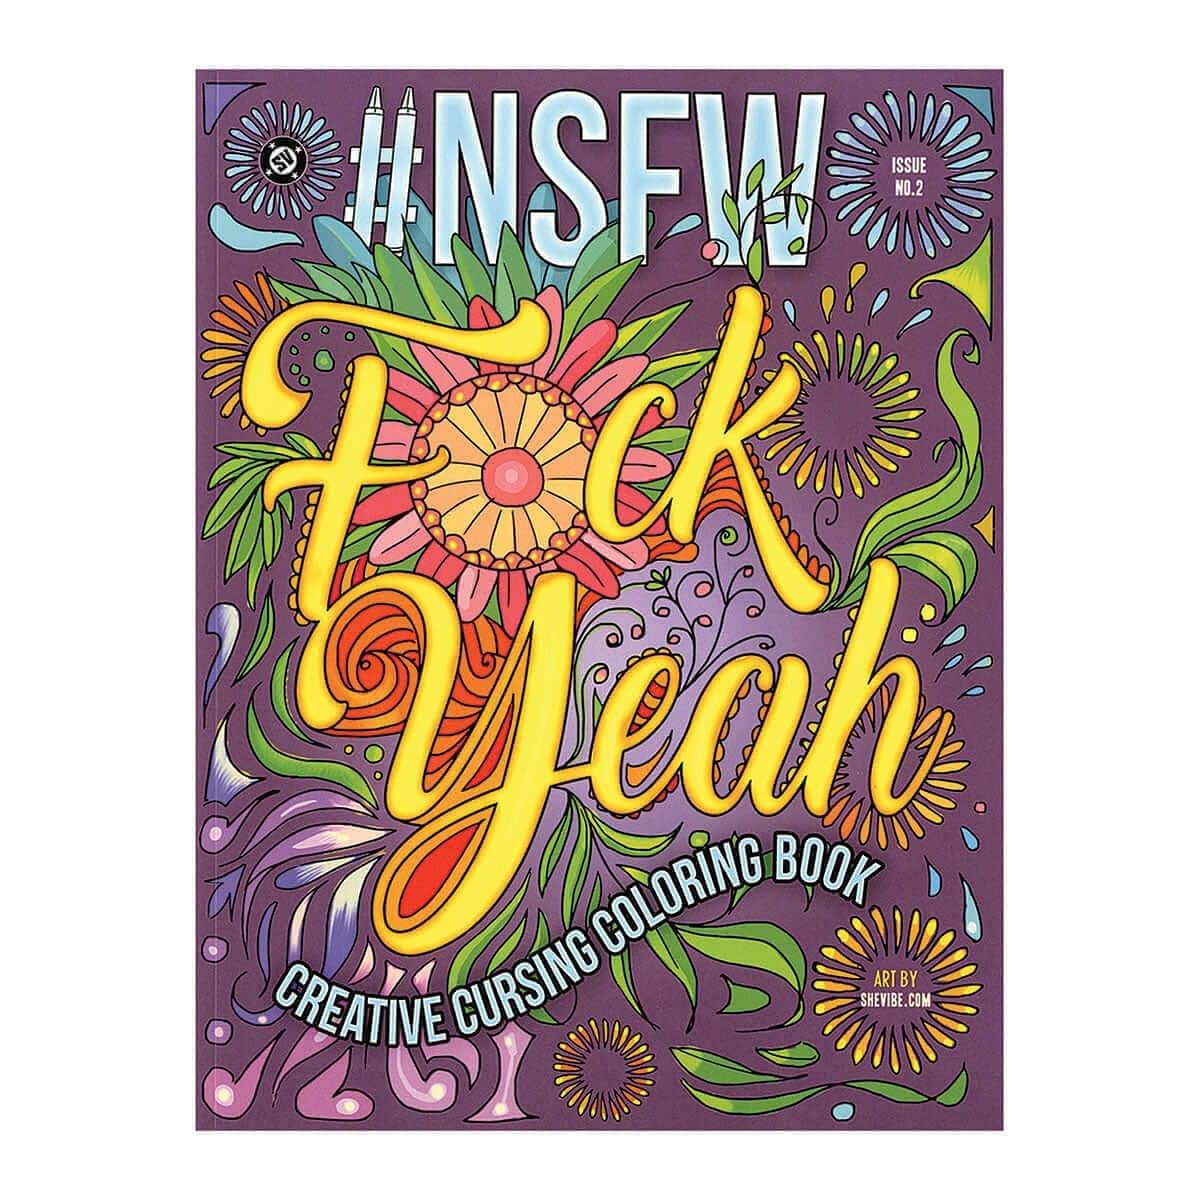 #NSFW Creative Cursing Coloring Book